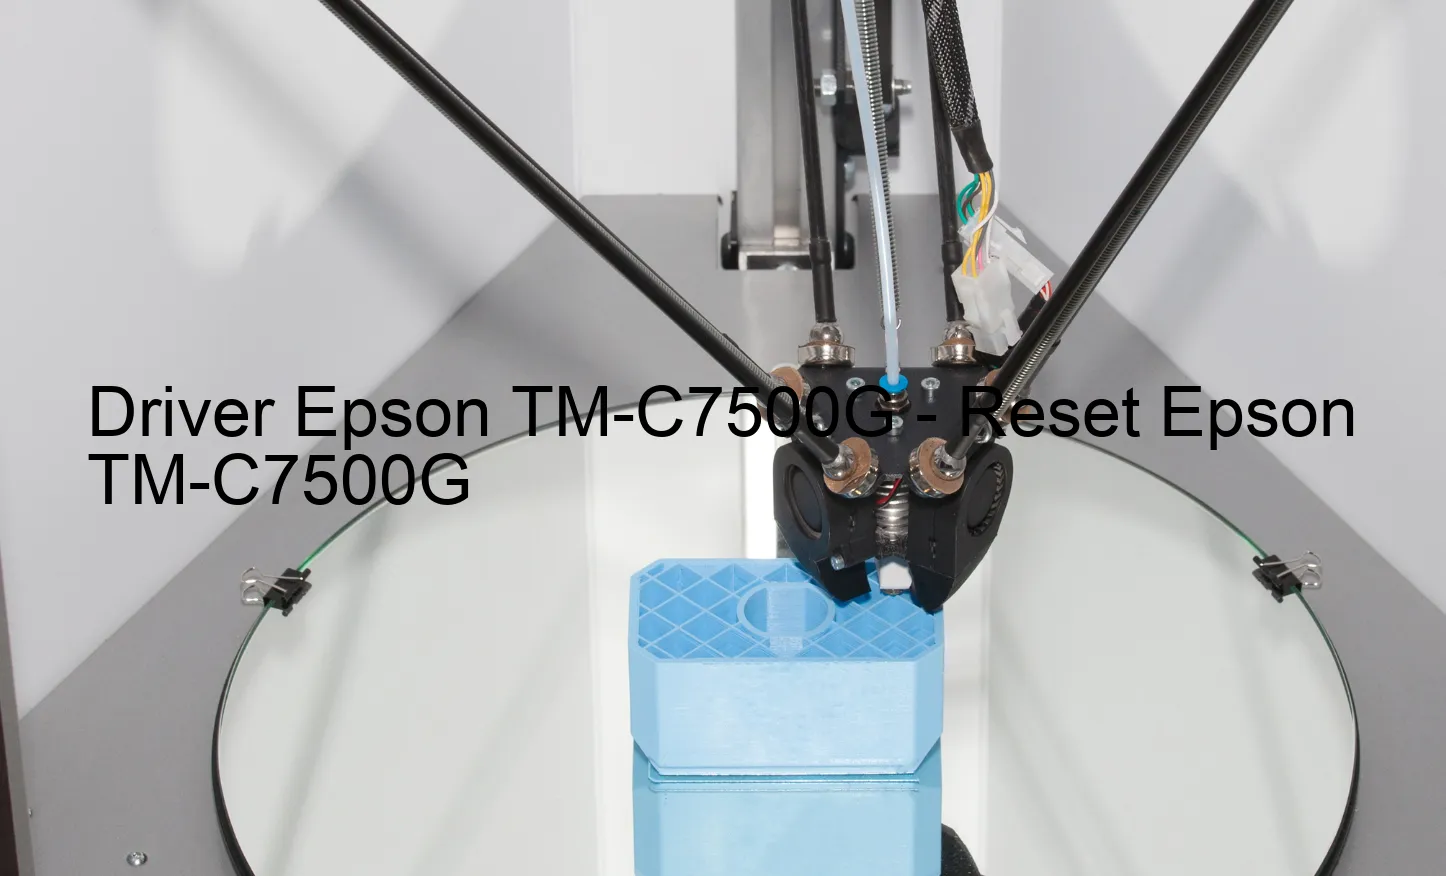 Epson TM-C7500Gのドライバー、Epson TM-C7500Gのリセットソフトウェア